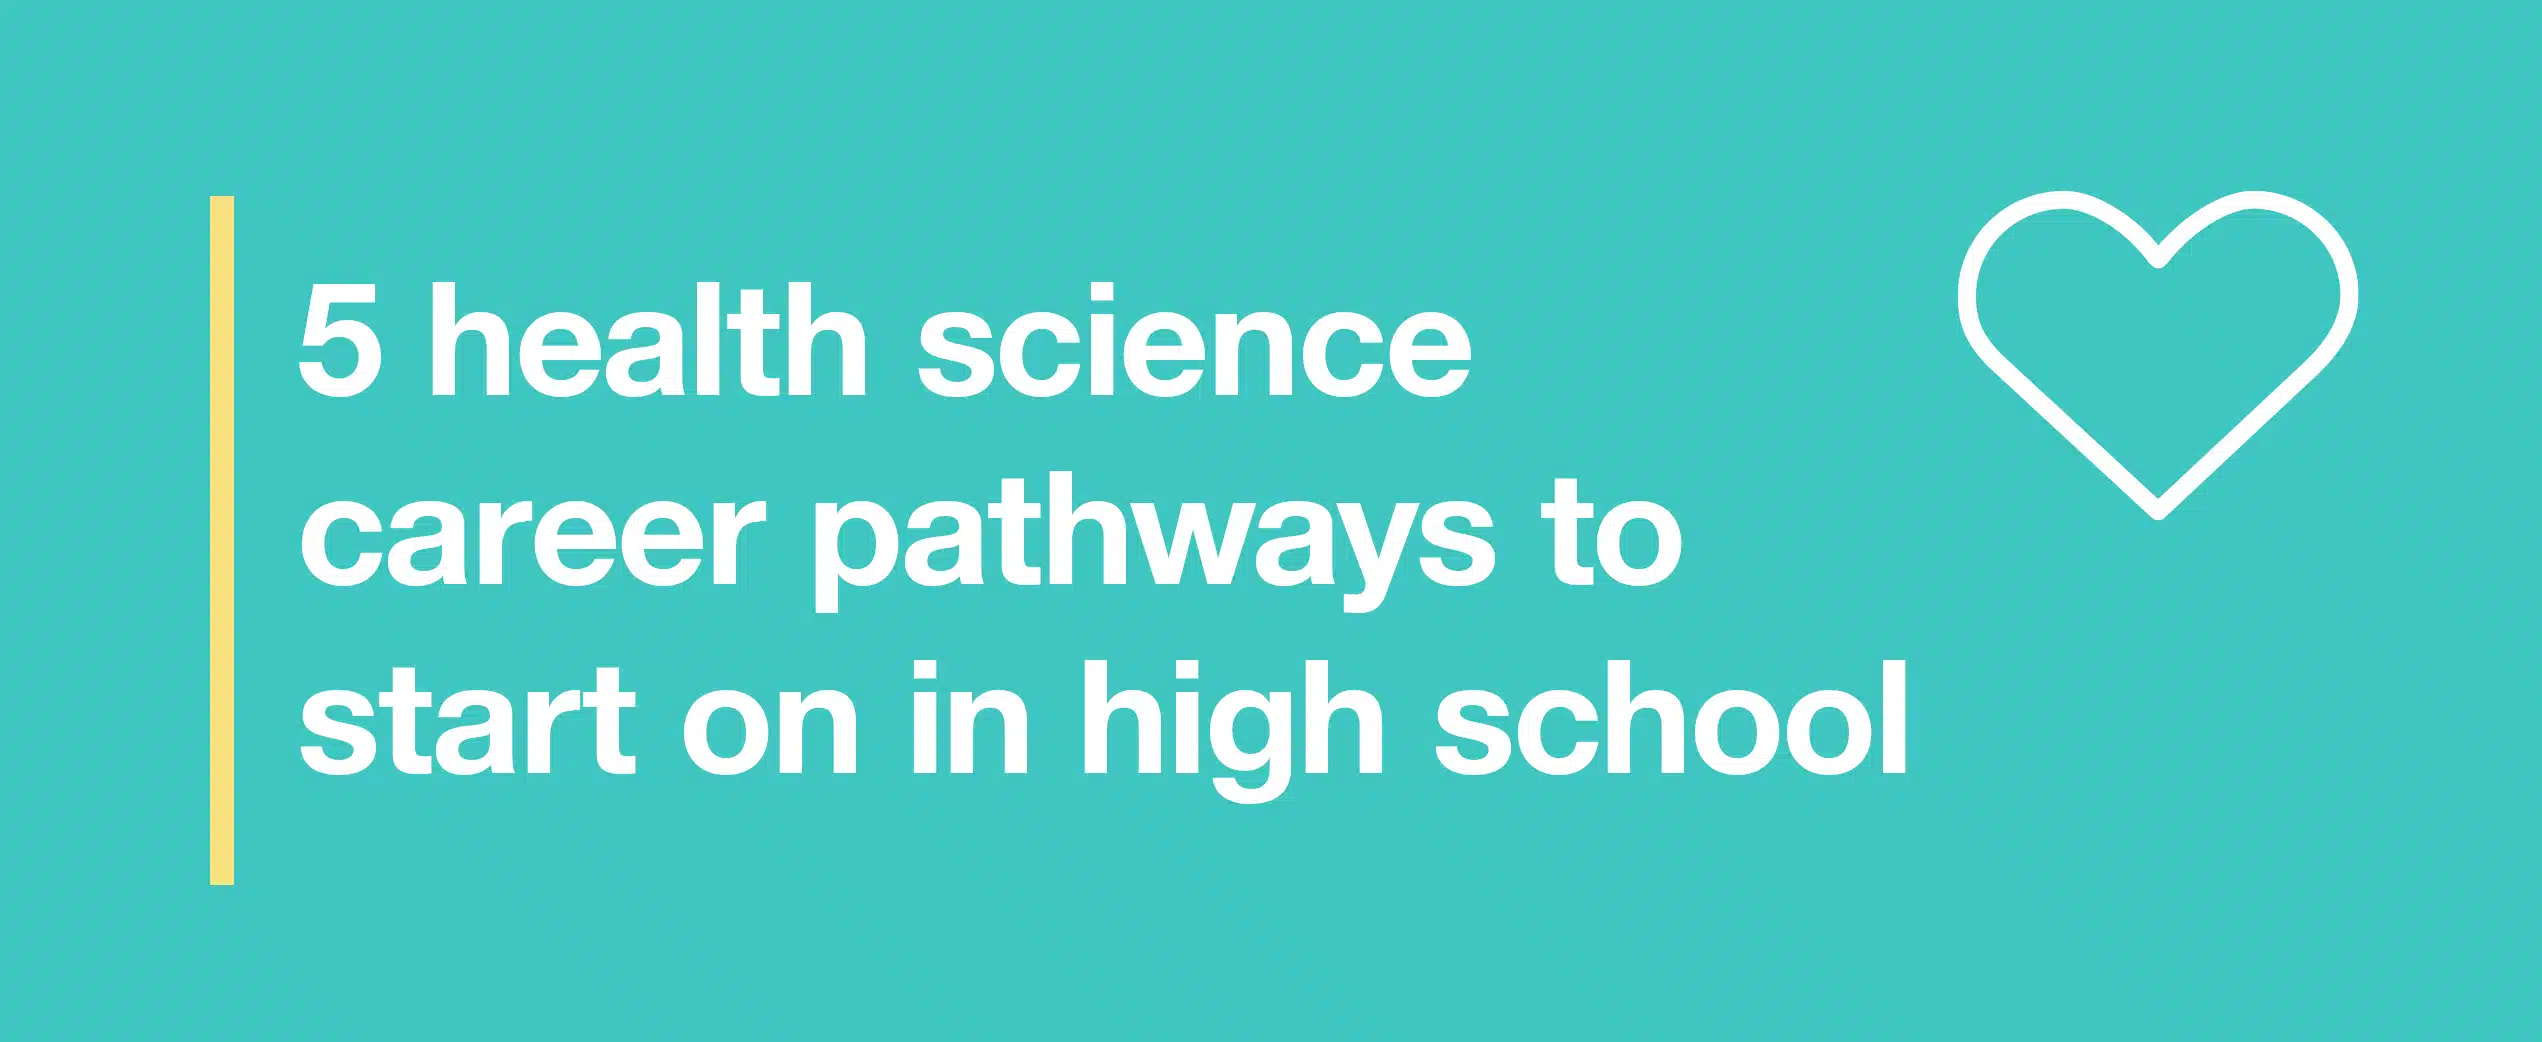 5 health science career pathways to start on in high school